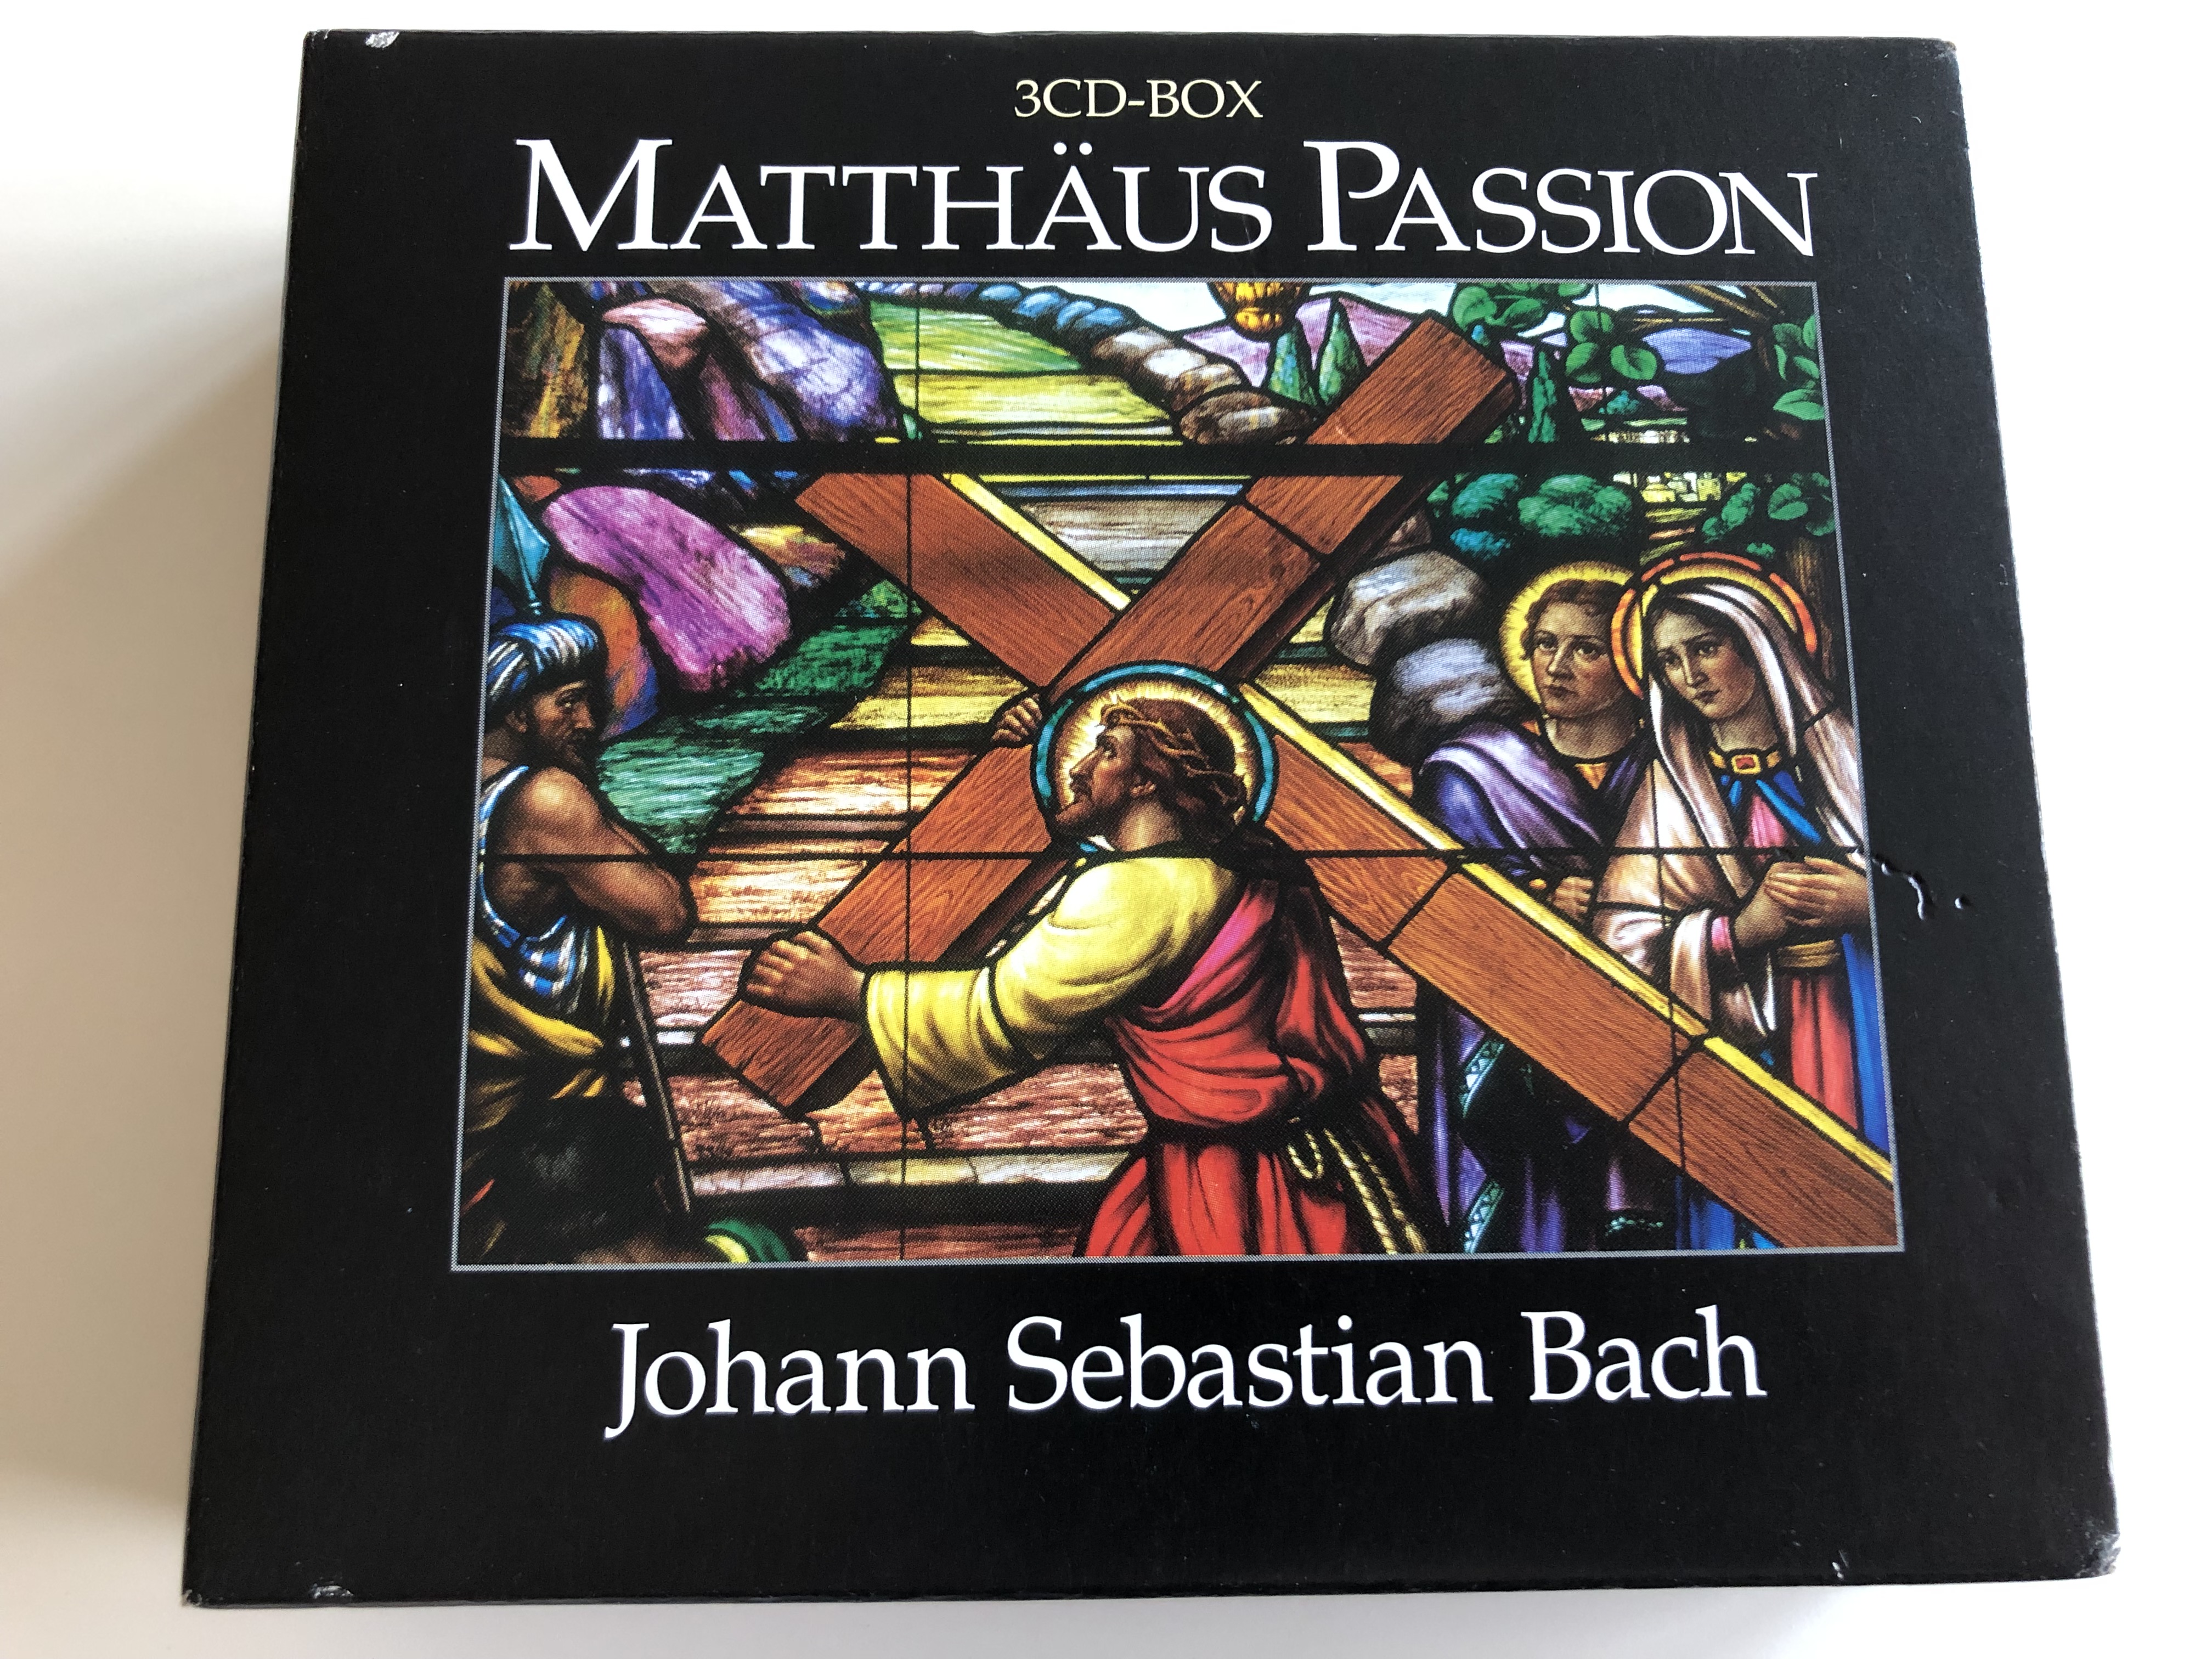 johann-sebastian-bach-matth-us-passion-3cd-box-the-heidelberg-chamber-orchestra-chorus-the-ellenbeck-abel.-chorus-conducted-by-wilfried-gottsche-audio-cd-set-1998-pal311-1-.jpg